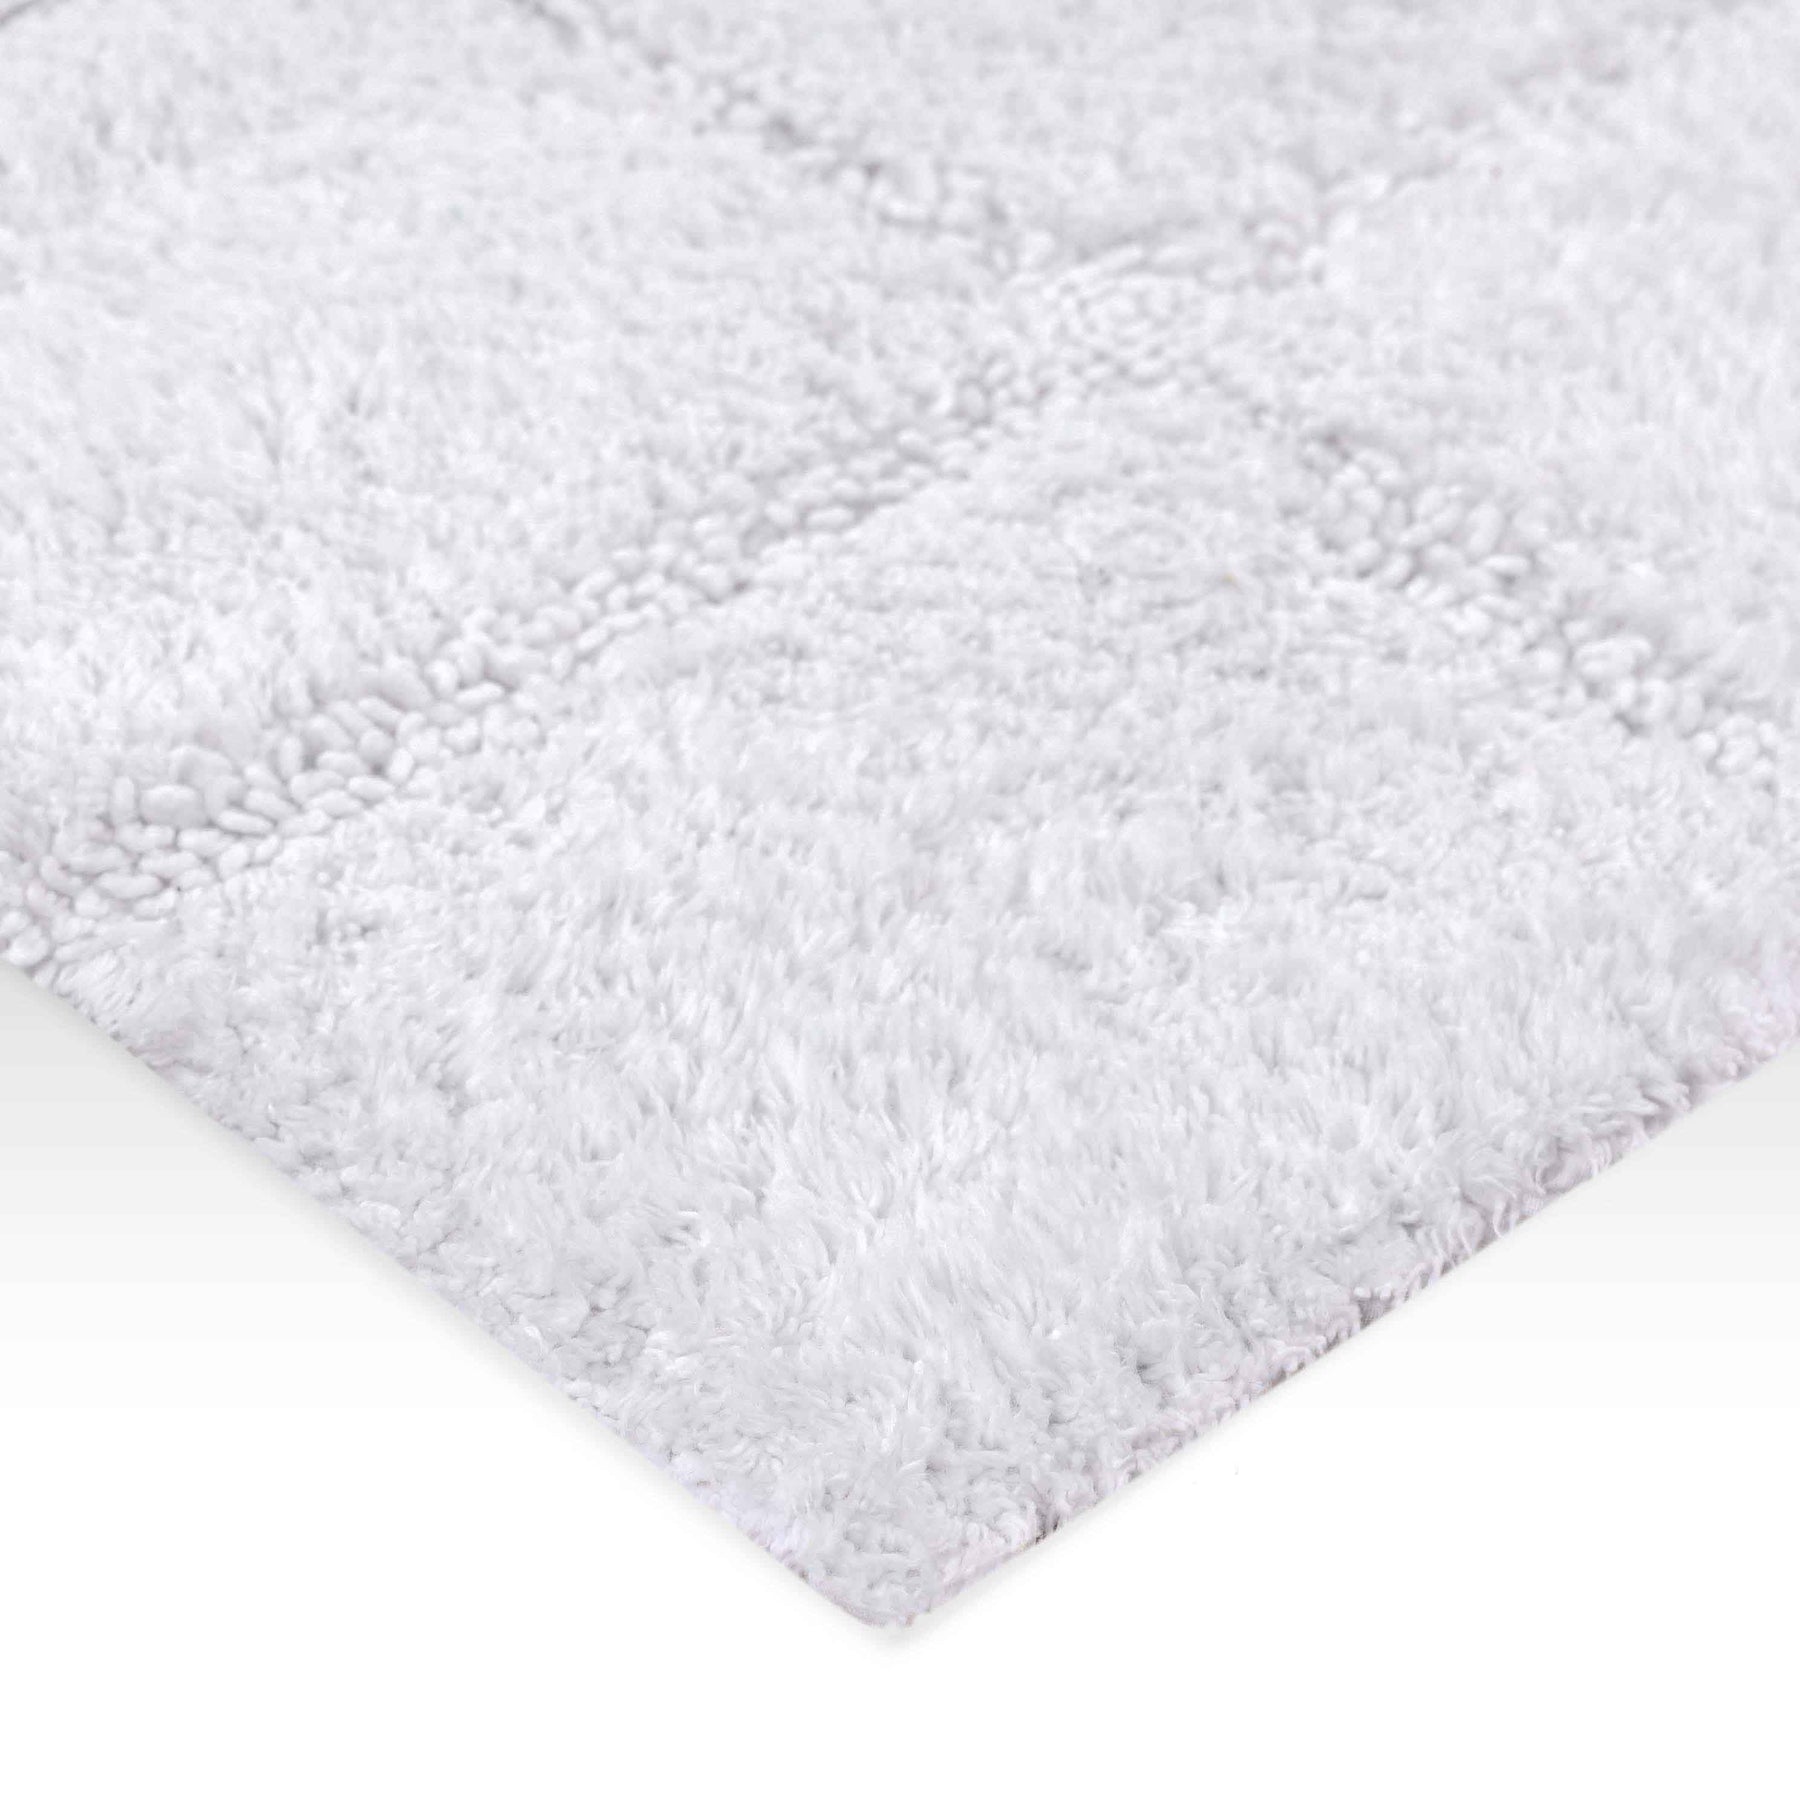 2 Piece Cotton Checkered Solid Non Slip Bath Rug Set - White